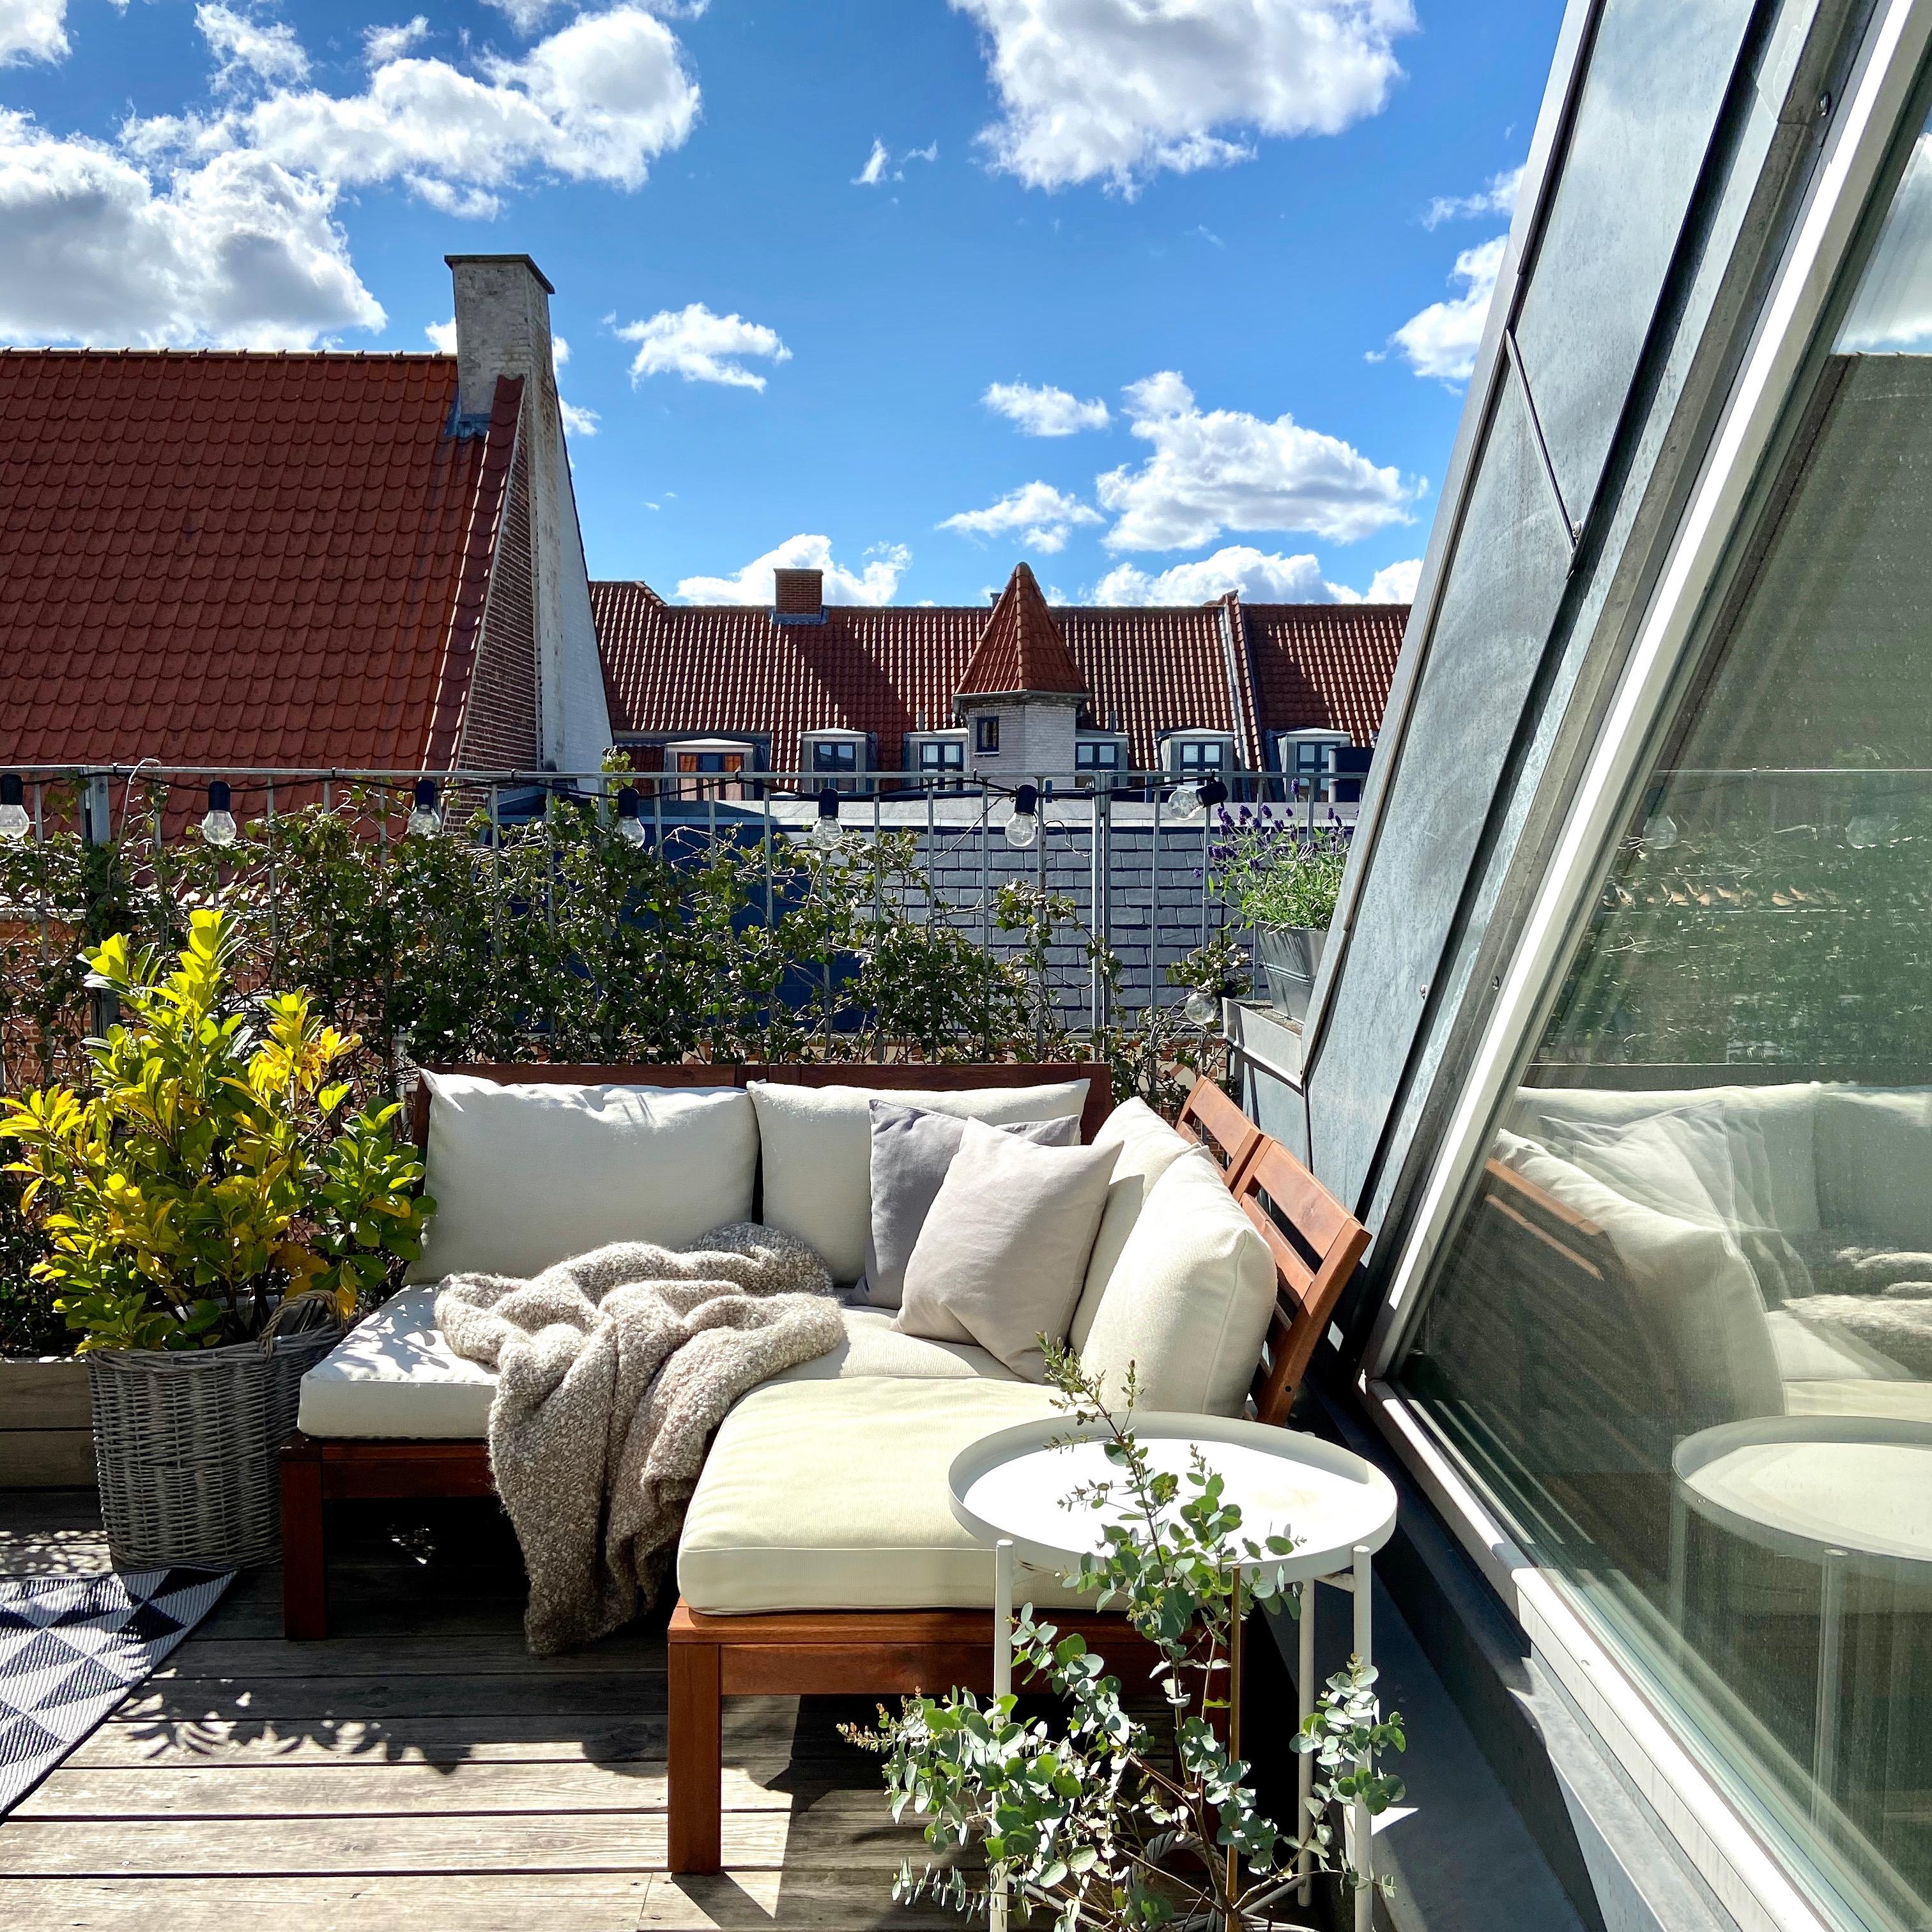 Happy Sunday ♡
#rooftop#dachterrasse#terrasse